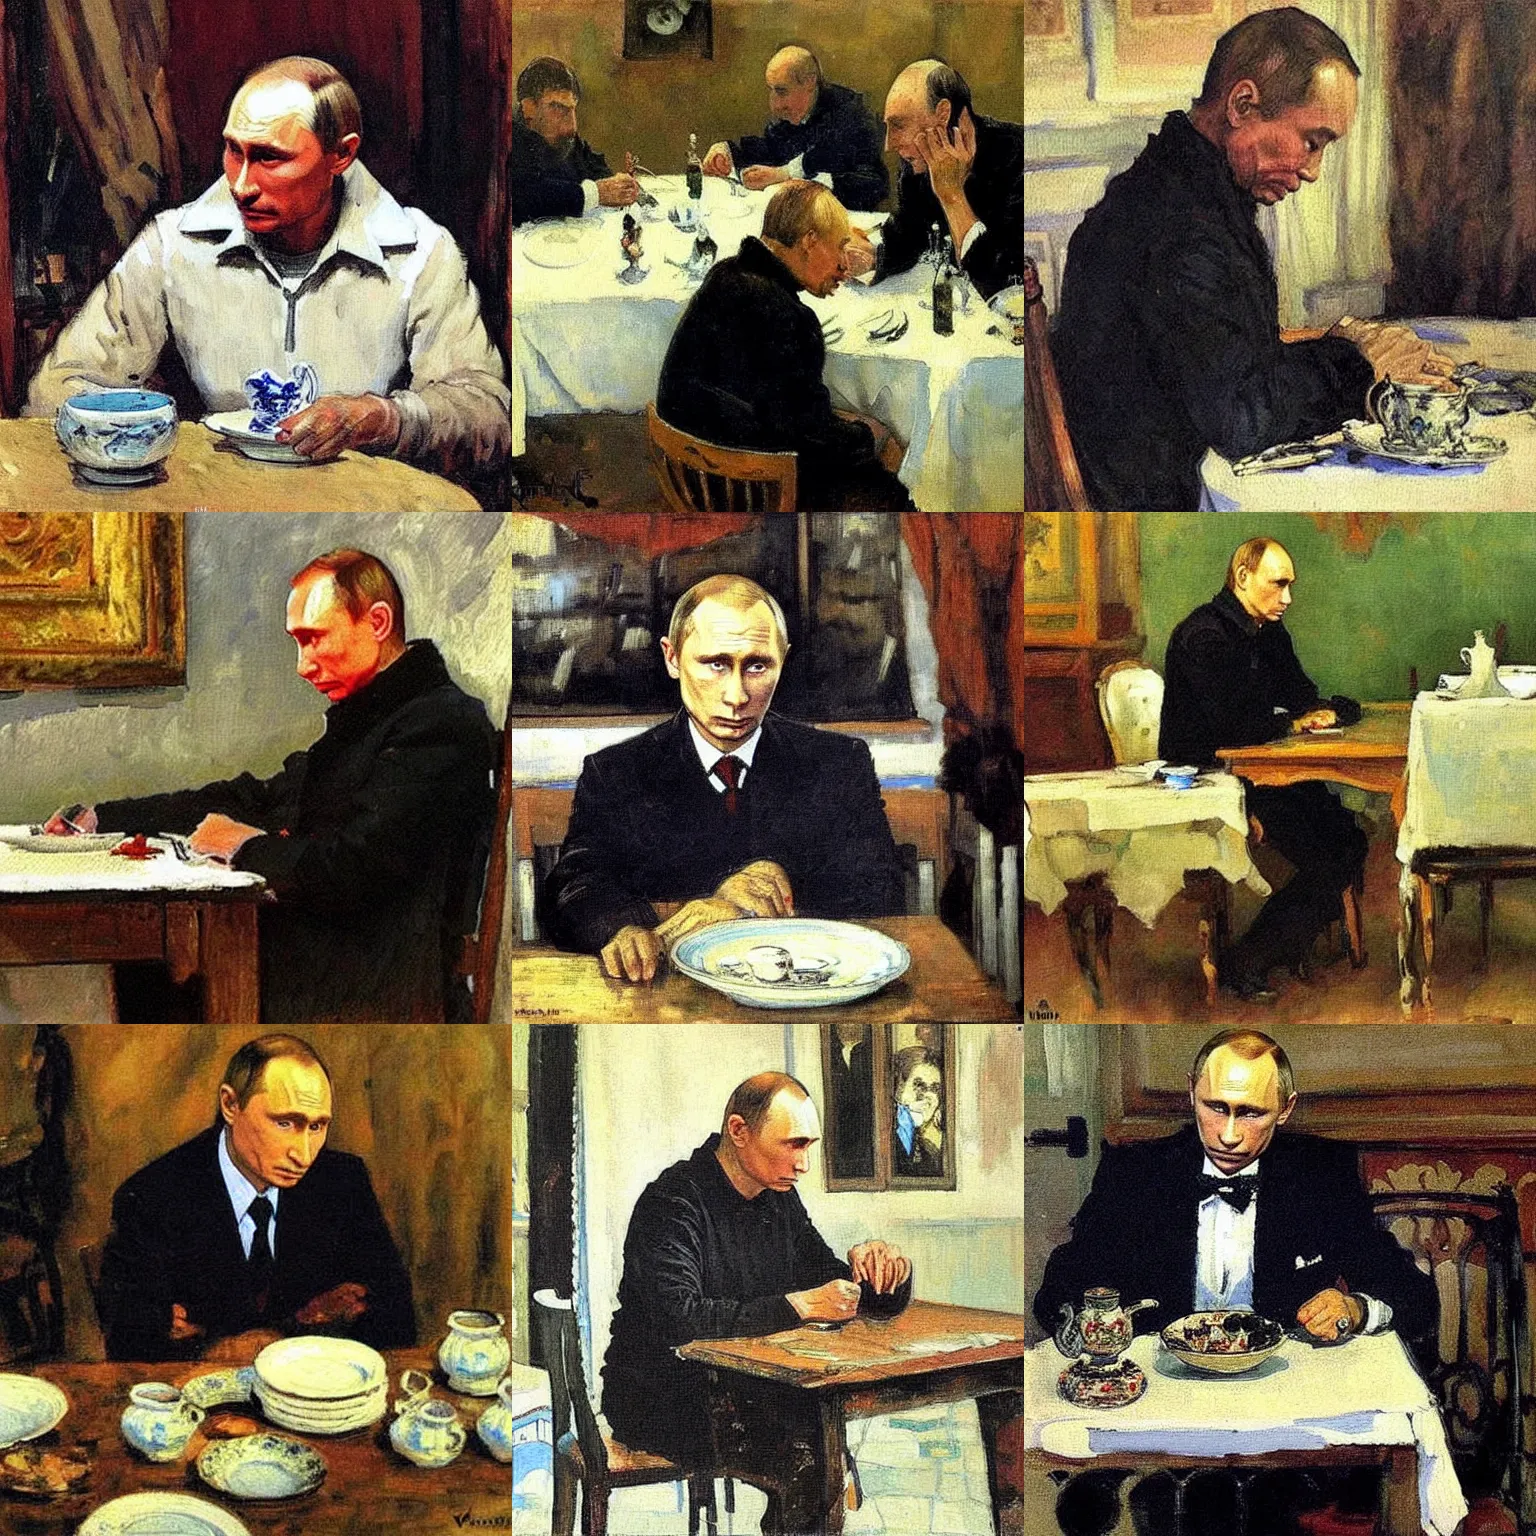 Prompt: sad old vladimir putin sitting at the table with broken plates on it. painting by valentin serov tretiakov gallery